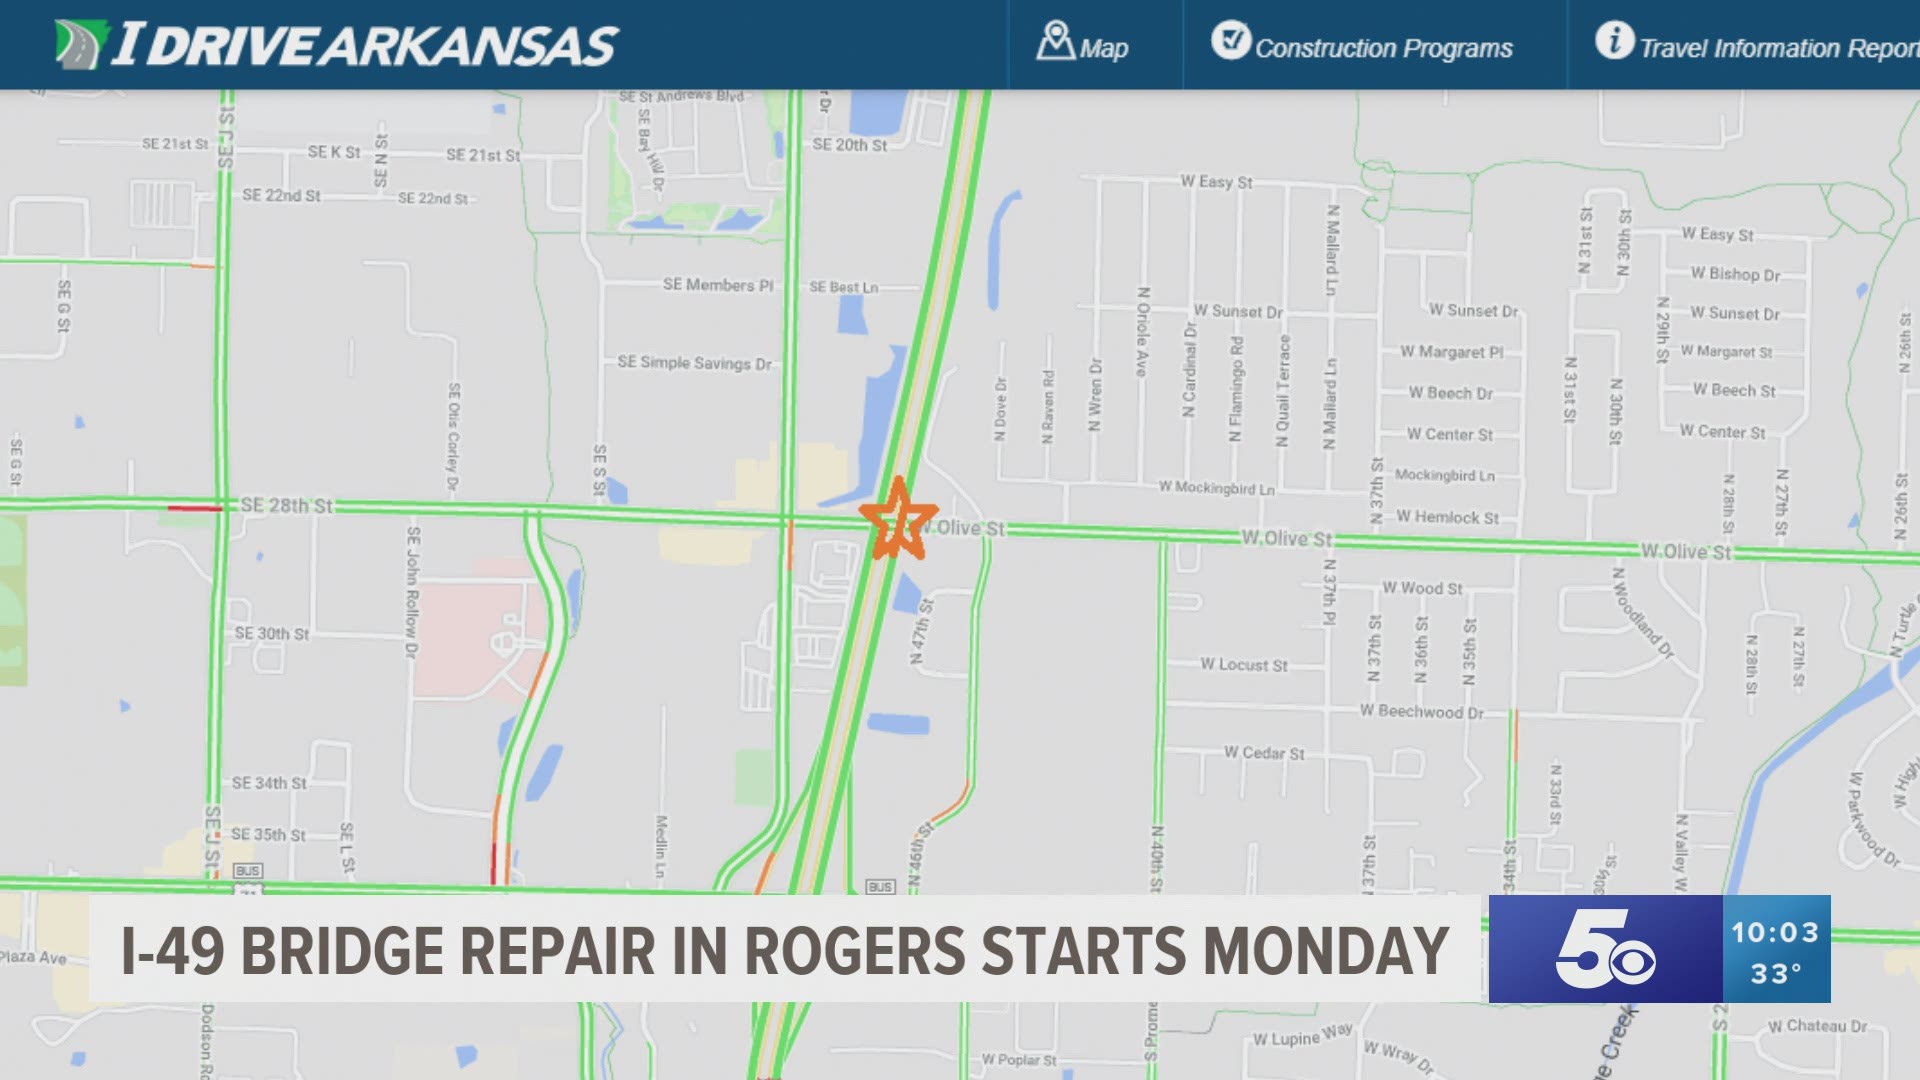 I-49 bridge repair in Rogers starts Monday